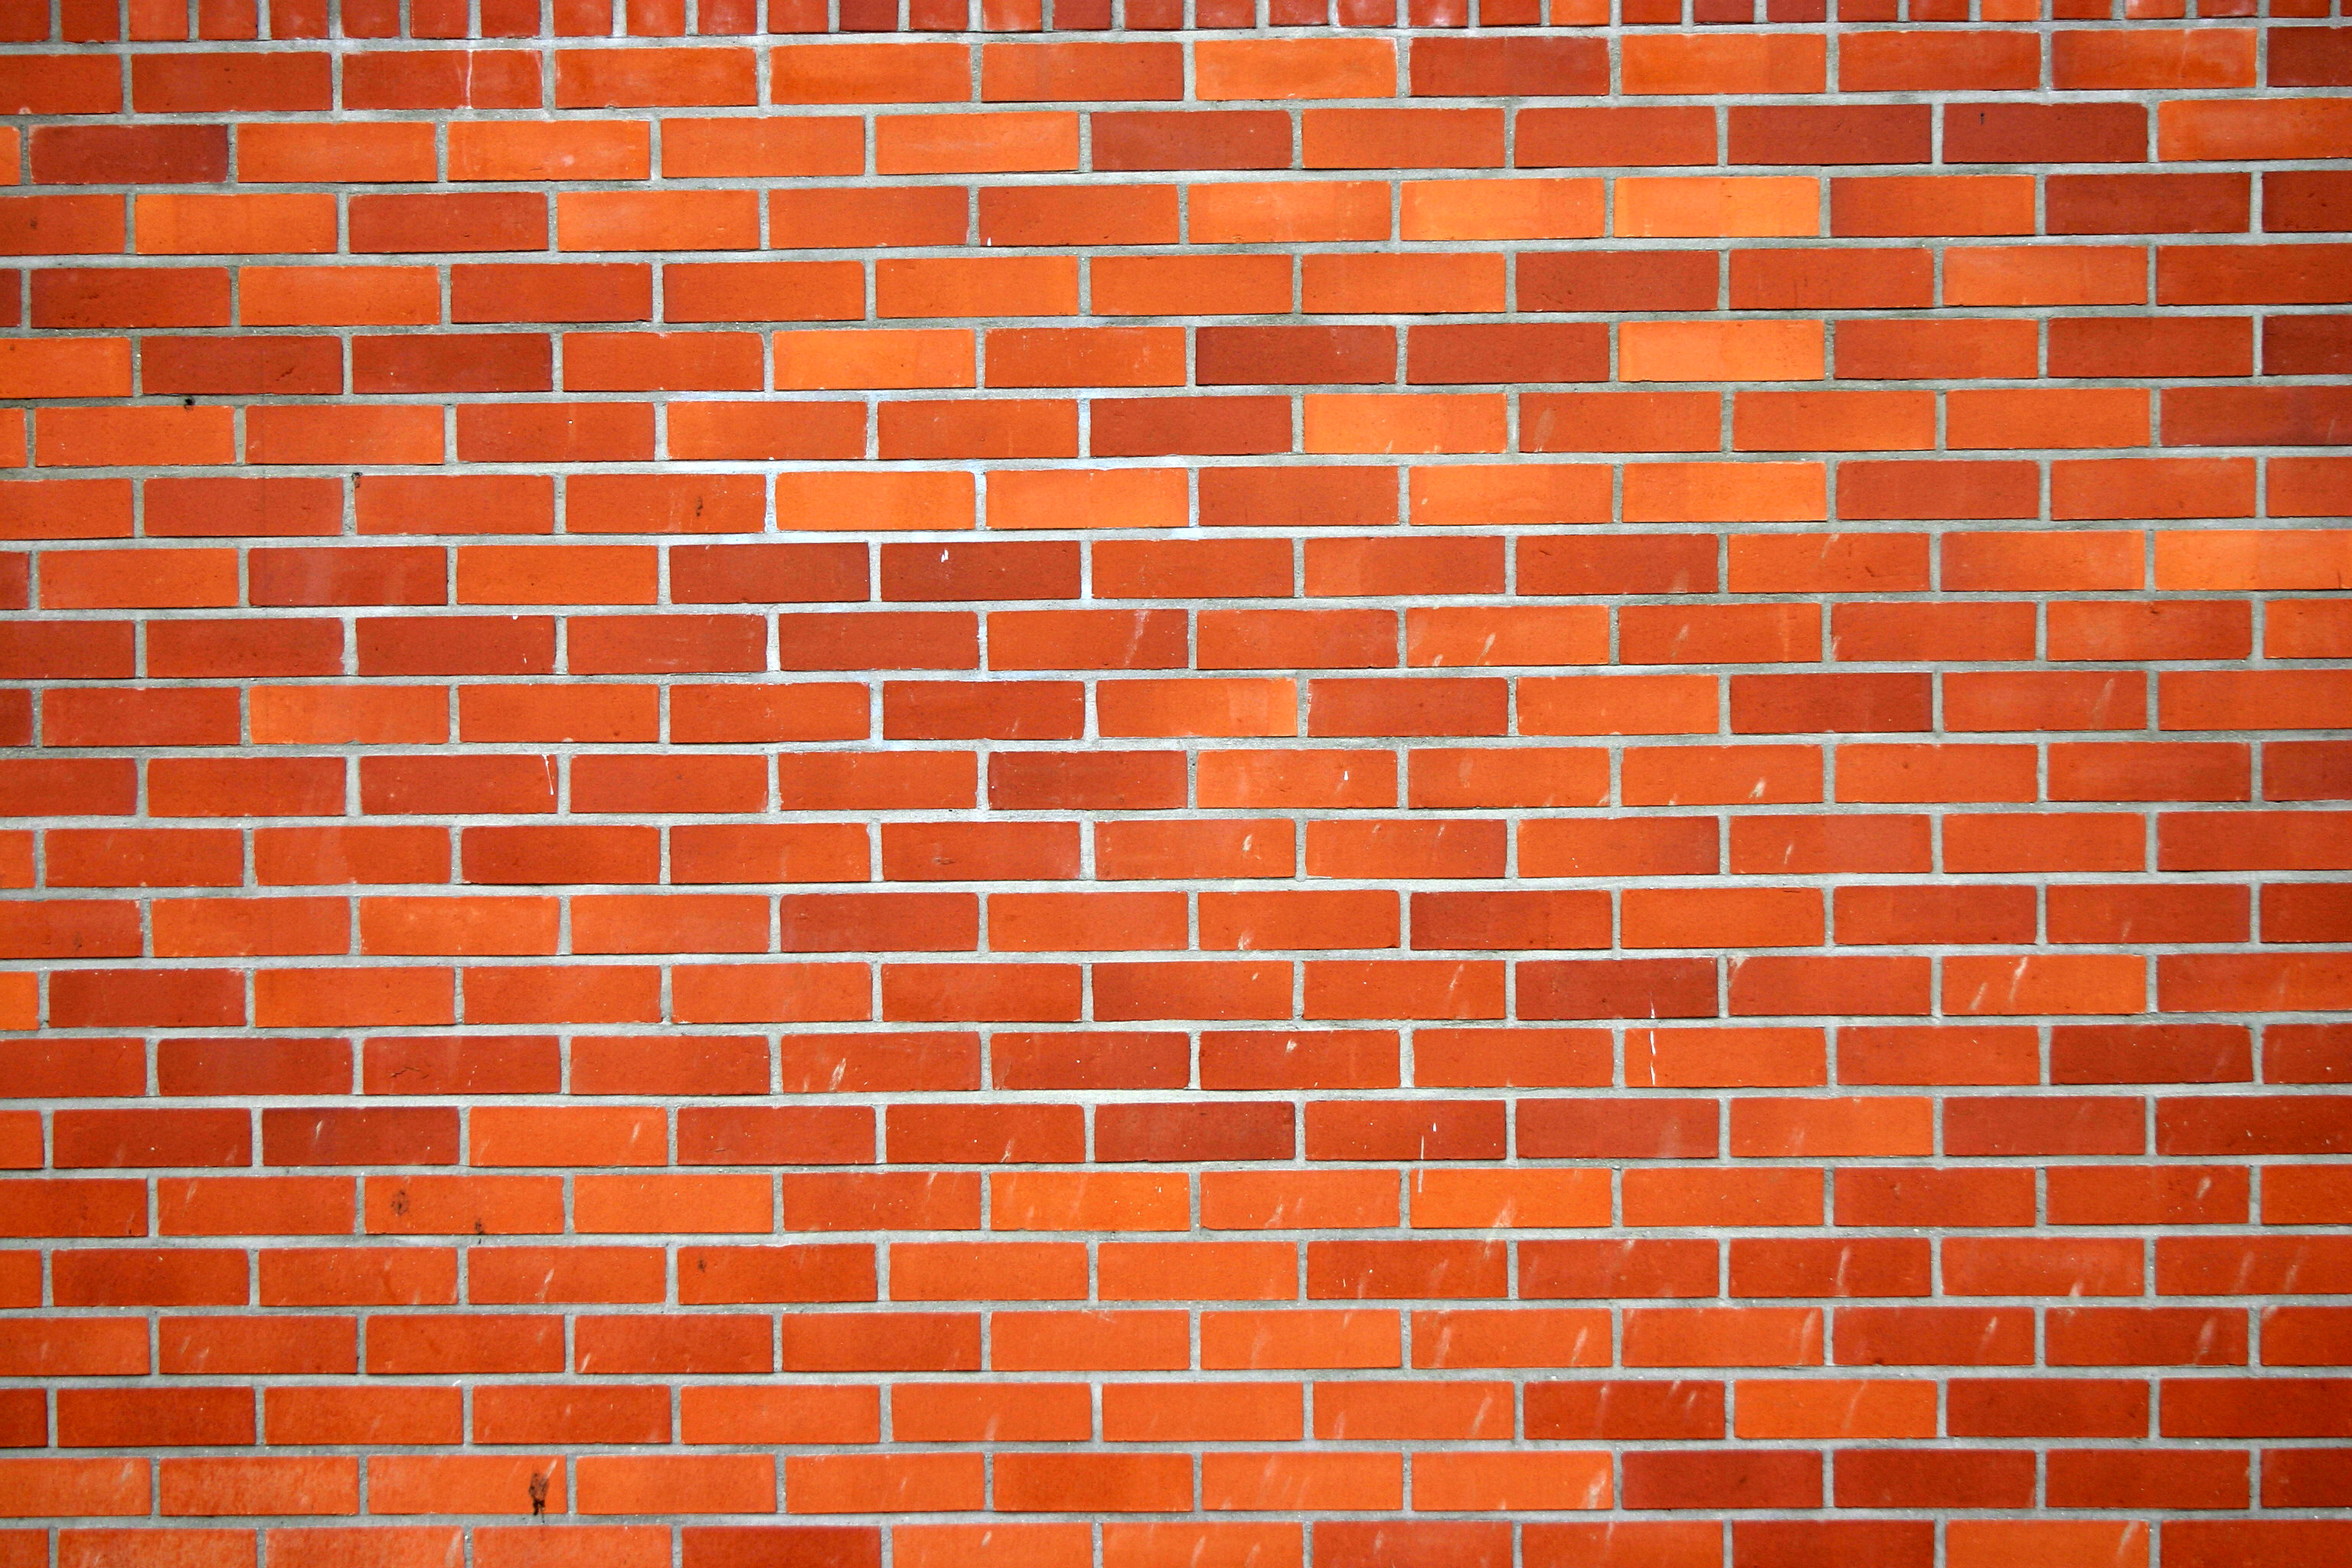 File:- Brickwall 01 -.jpg - Wikimedia Commons